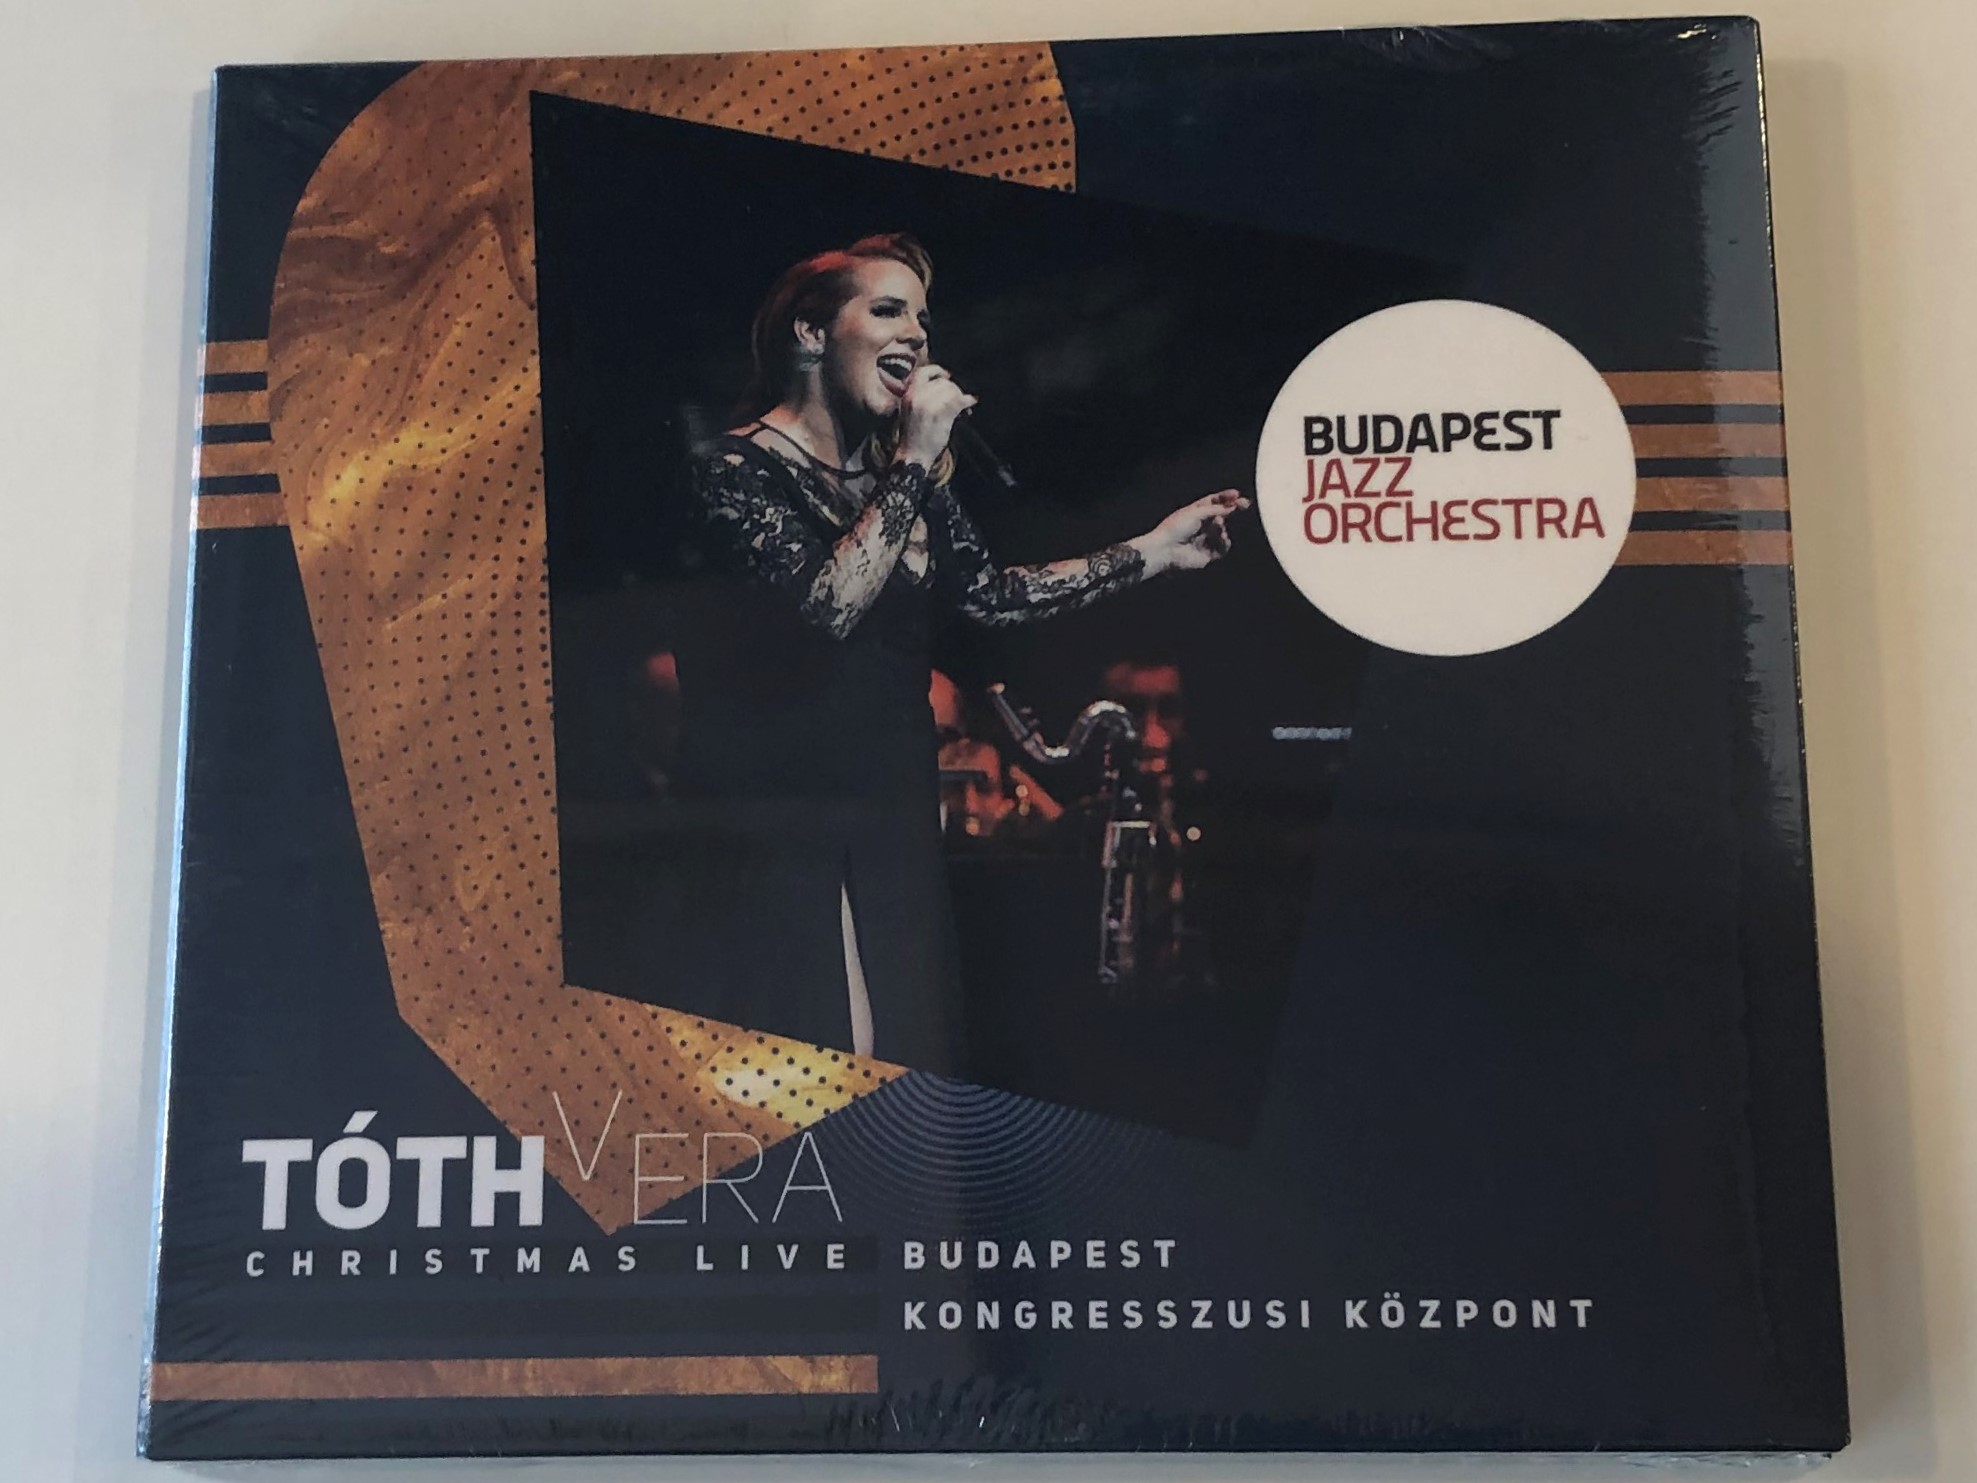 toth-vera-christmas-live-budapest-kongresszusi-kozpont-budapest-jazz-orchestra-bjo-records-audio-cd-2019-bjo-0010-1-.jpg